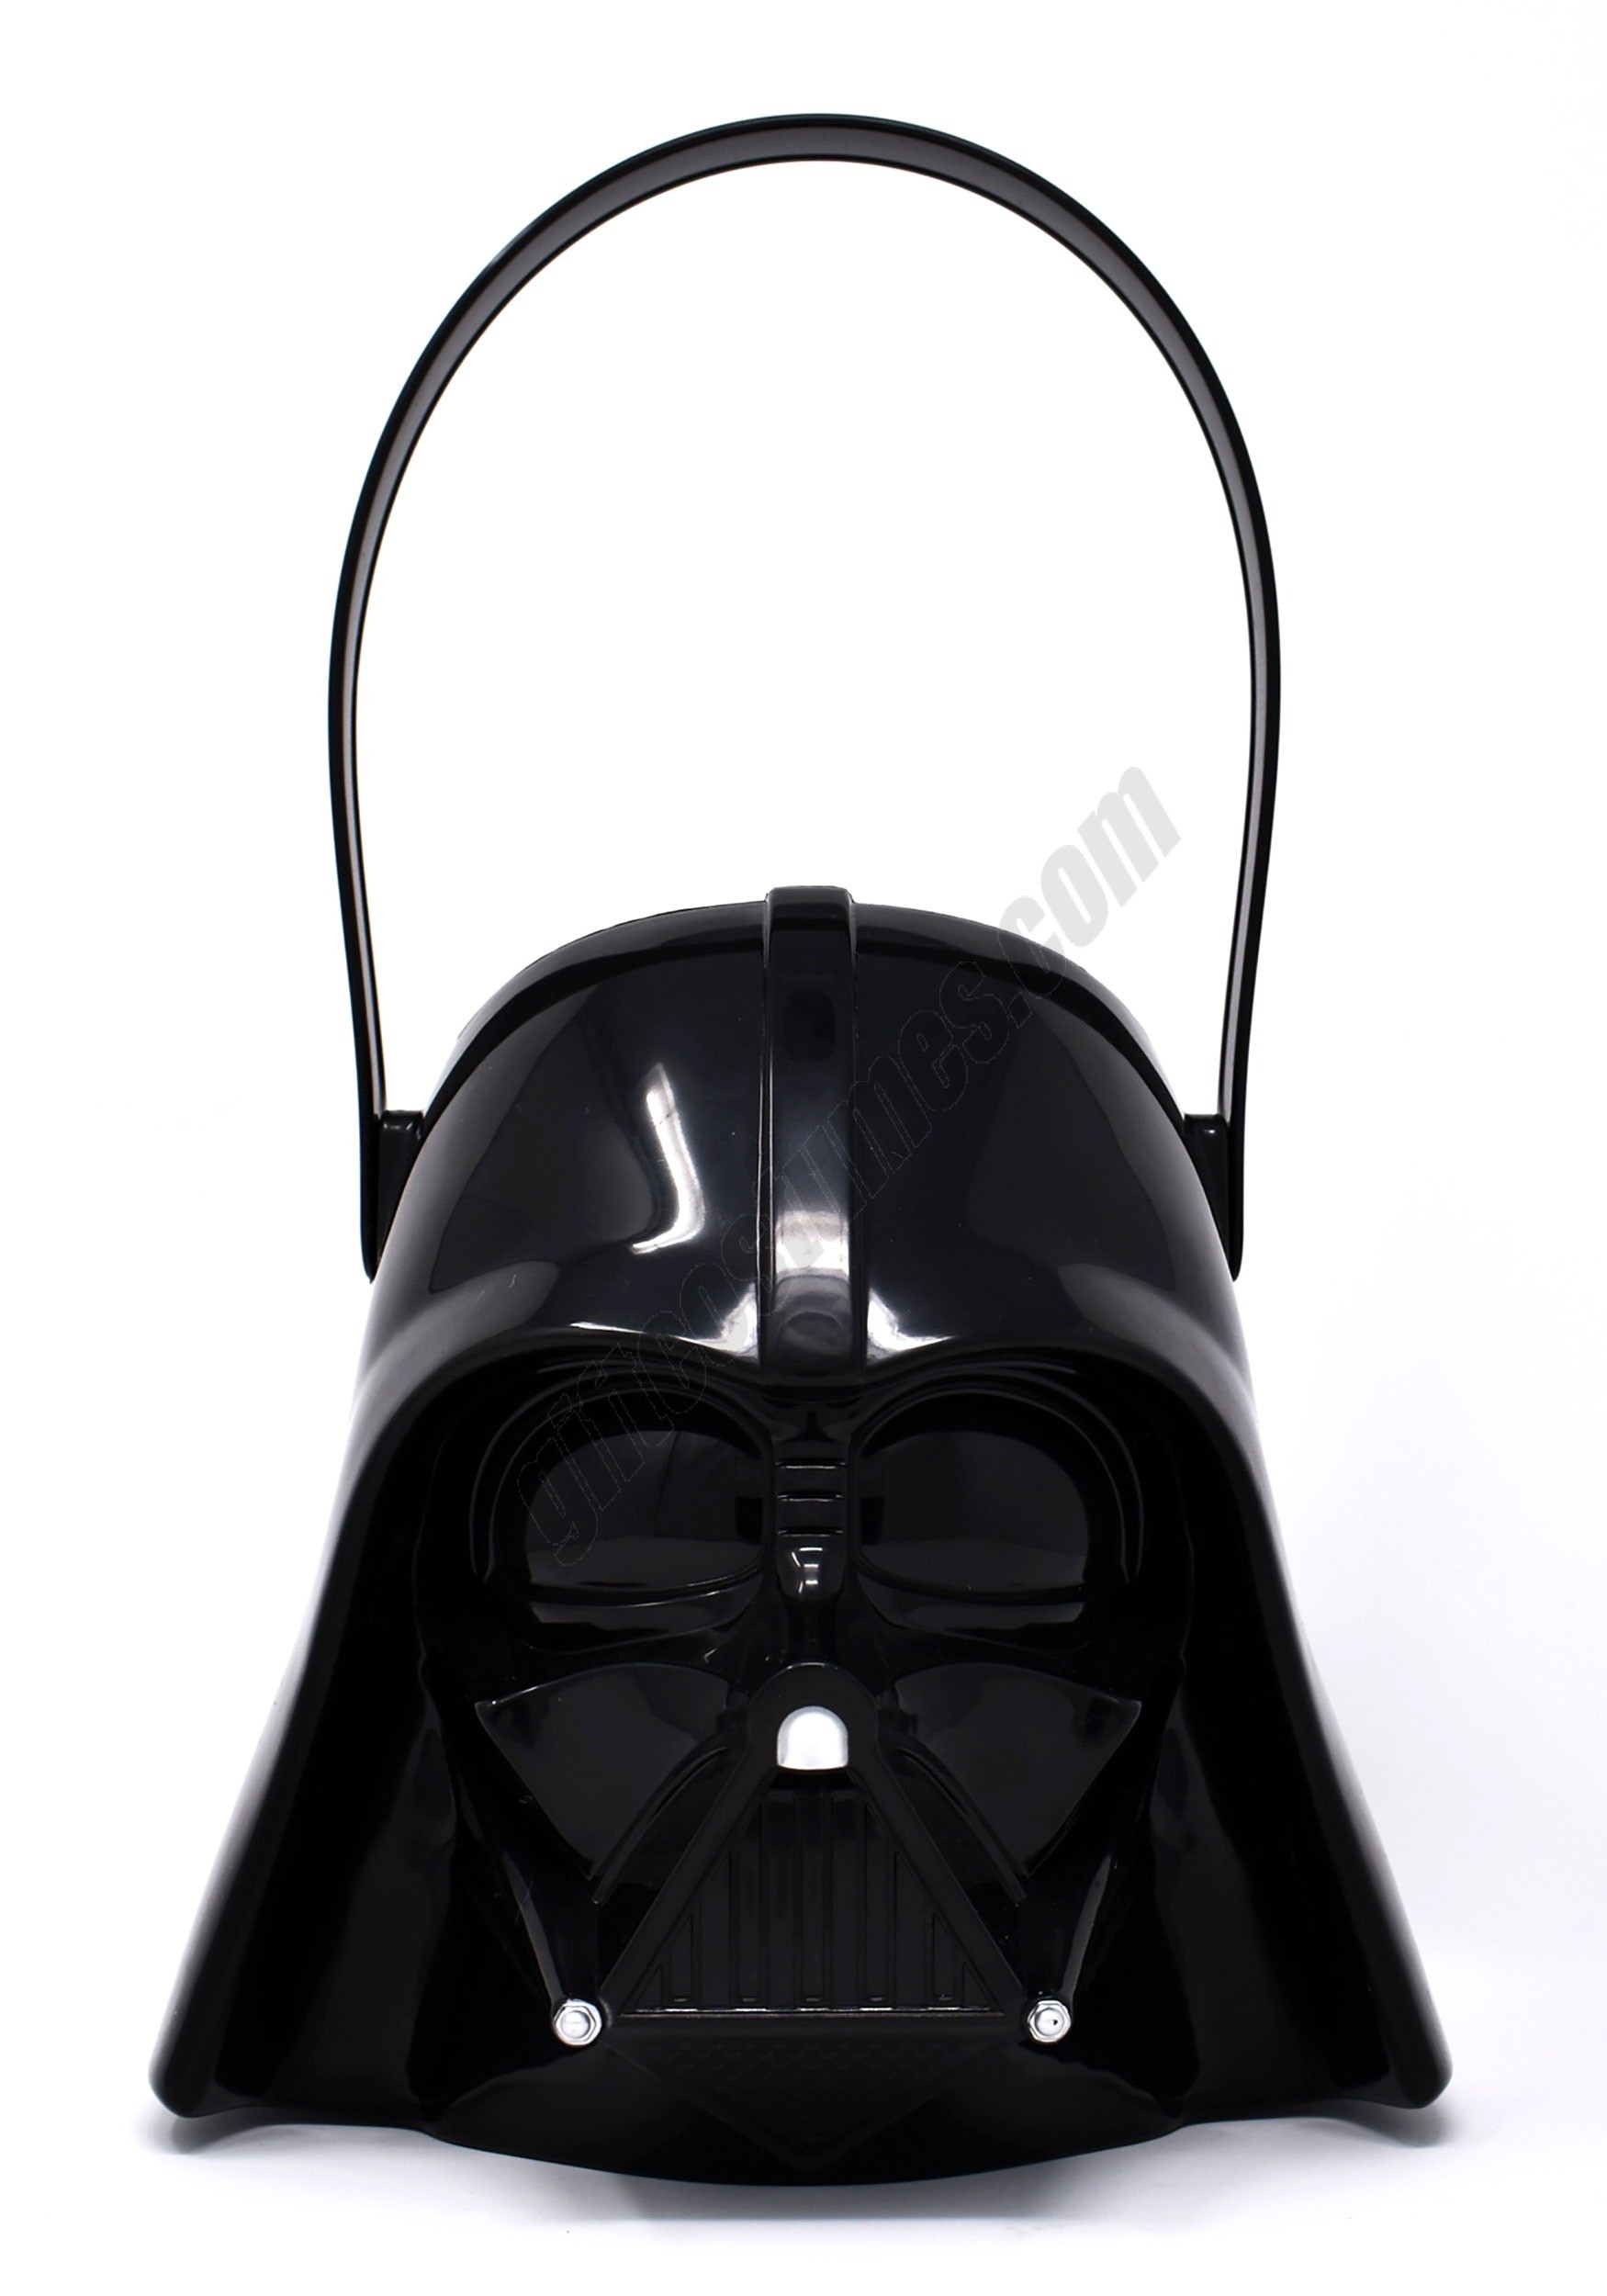 Darth Vader Plastic Trick or Treat Bucket Promotions - Darth Vader Plastic Trick or Treat Bucket Promotions